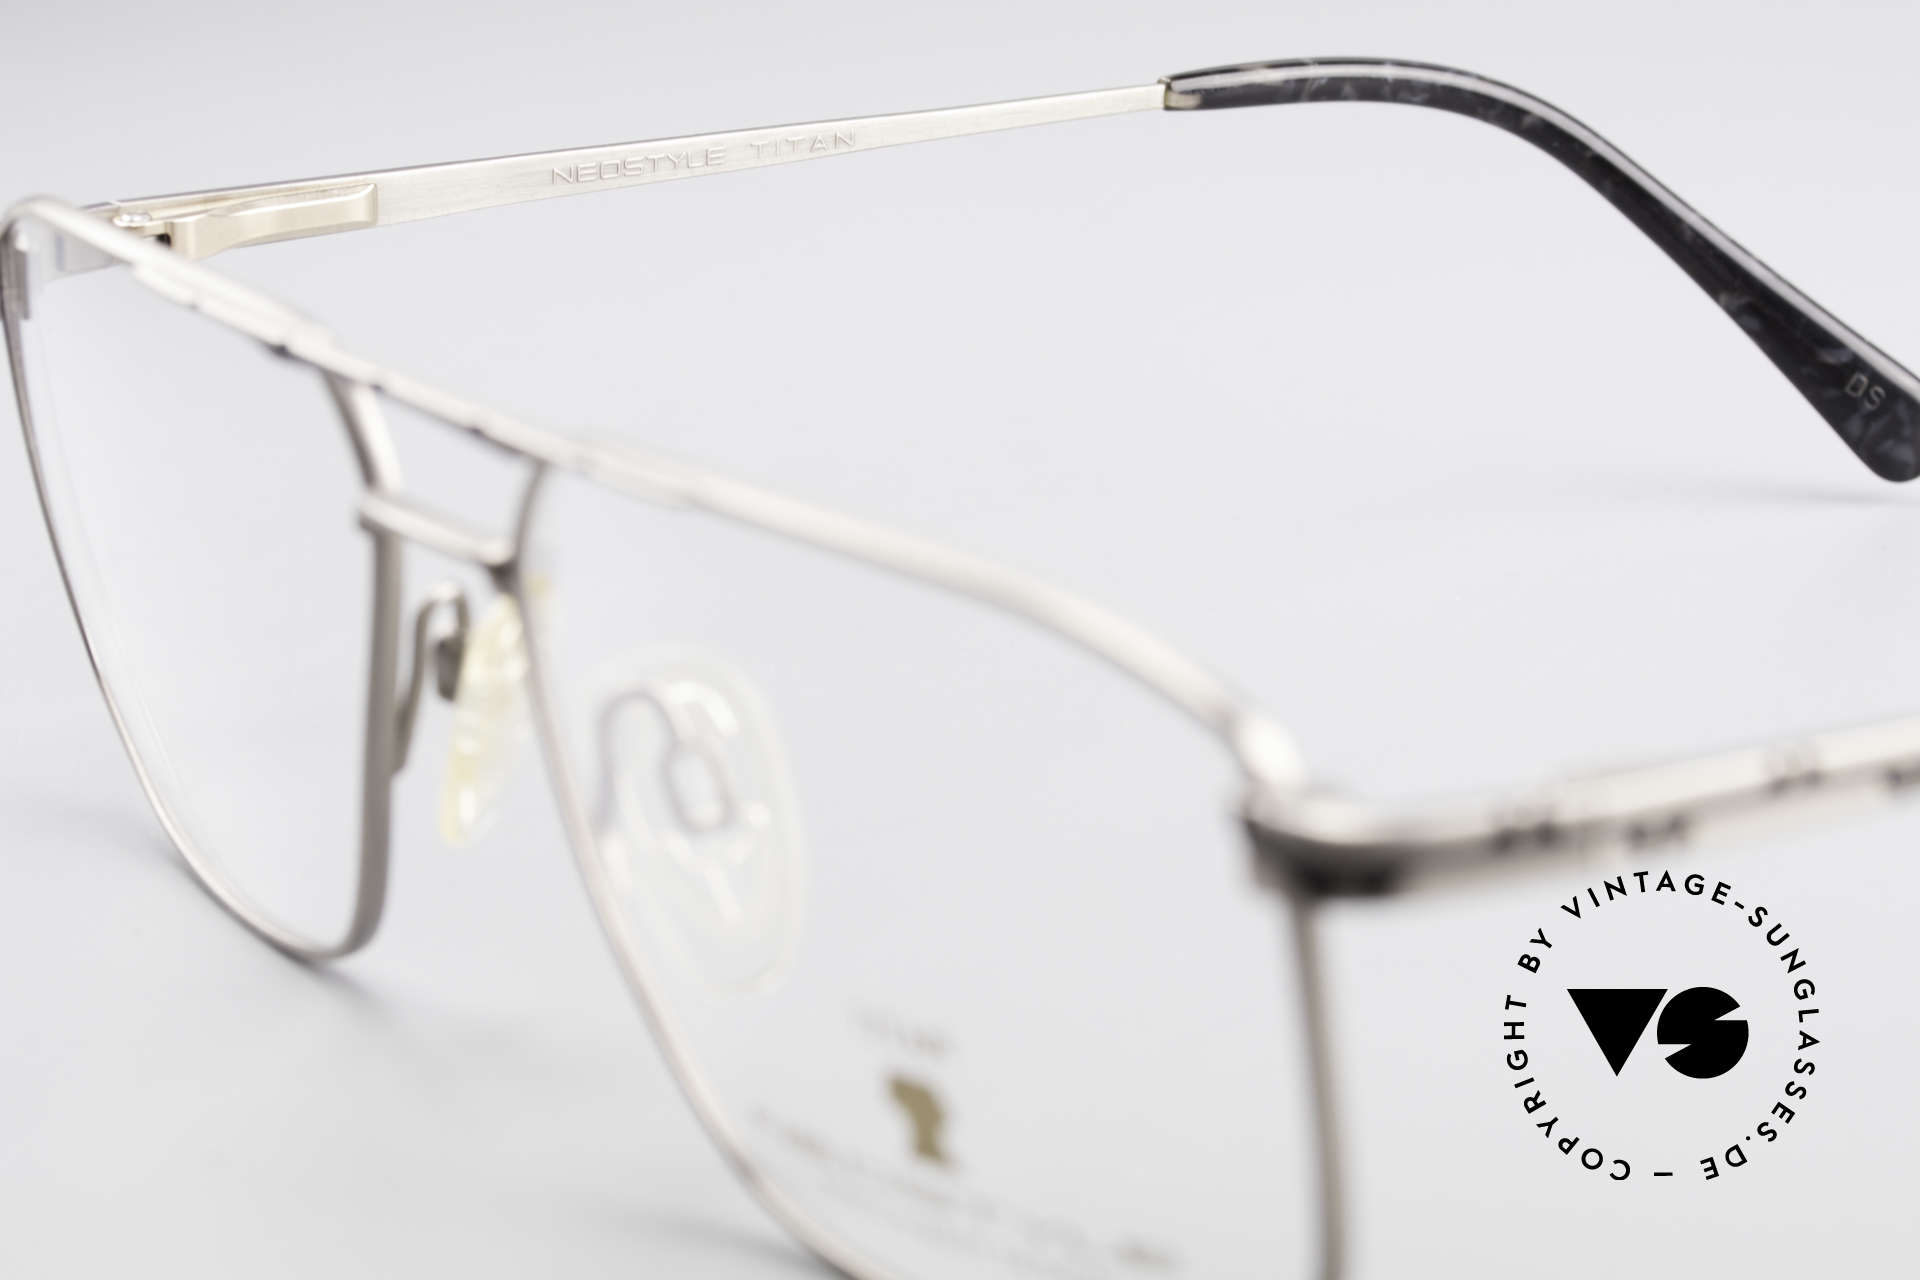 Neostyle Dynasty 362 XL Titanium Eyeglasses Men, NO RETRO glasses, just a stylish old ORIGINAL, Made for Men